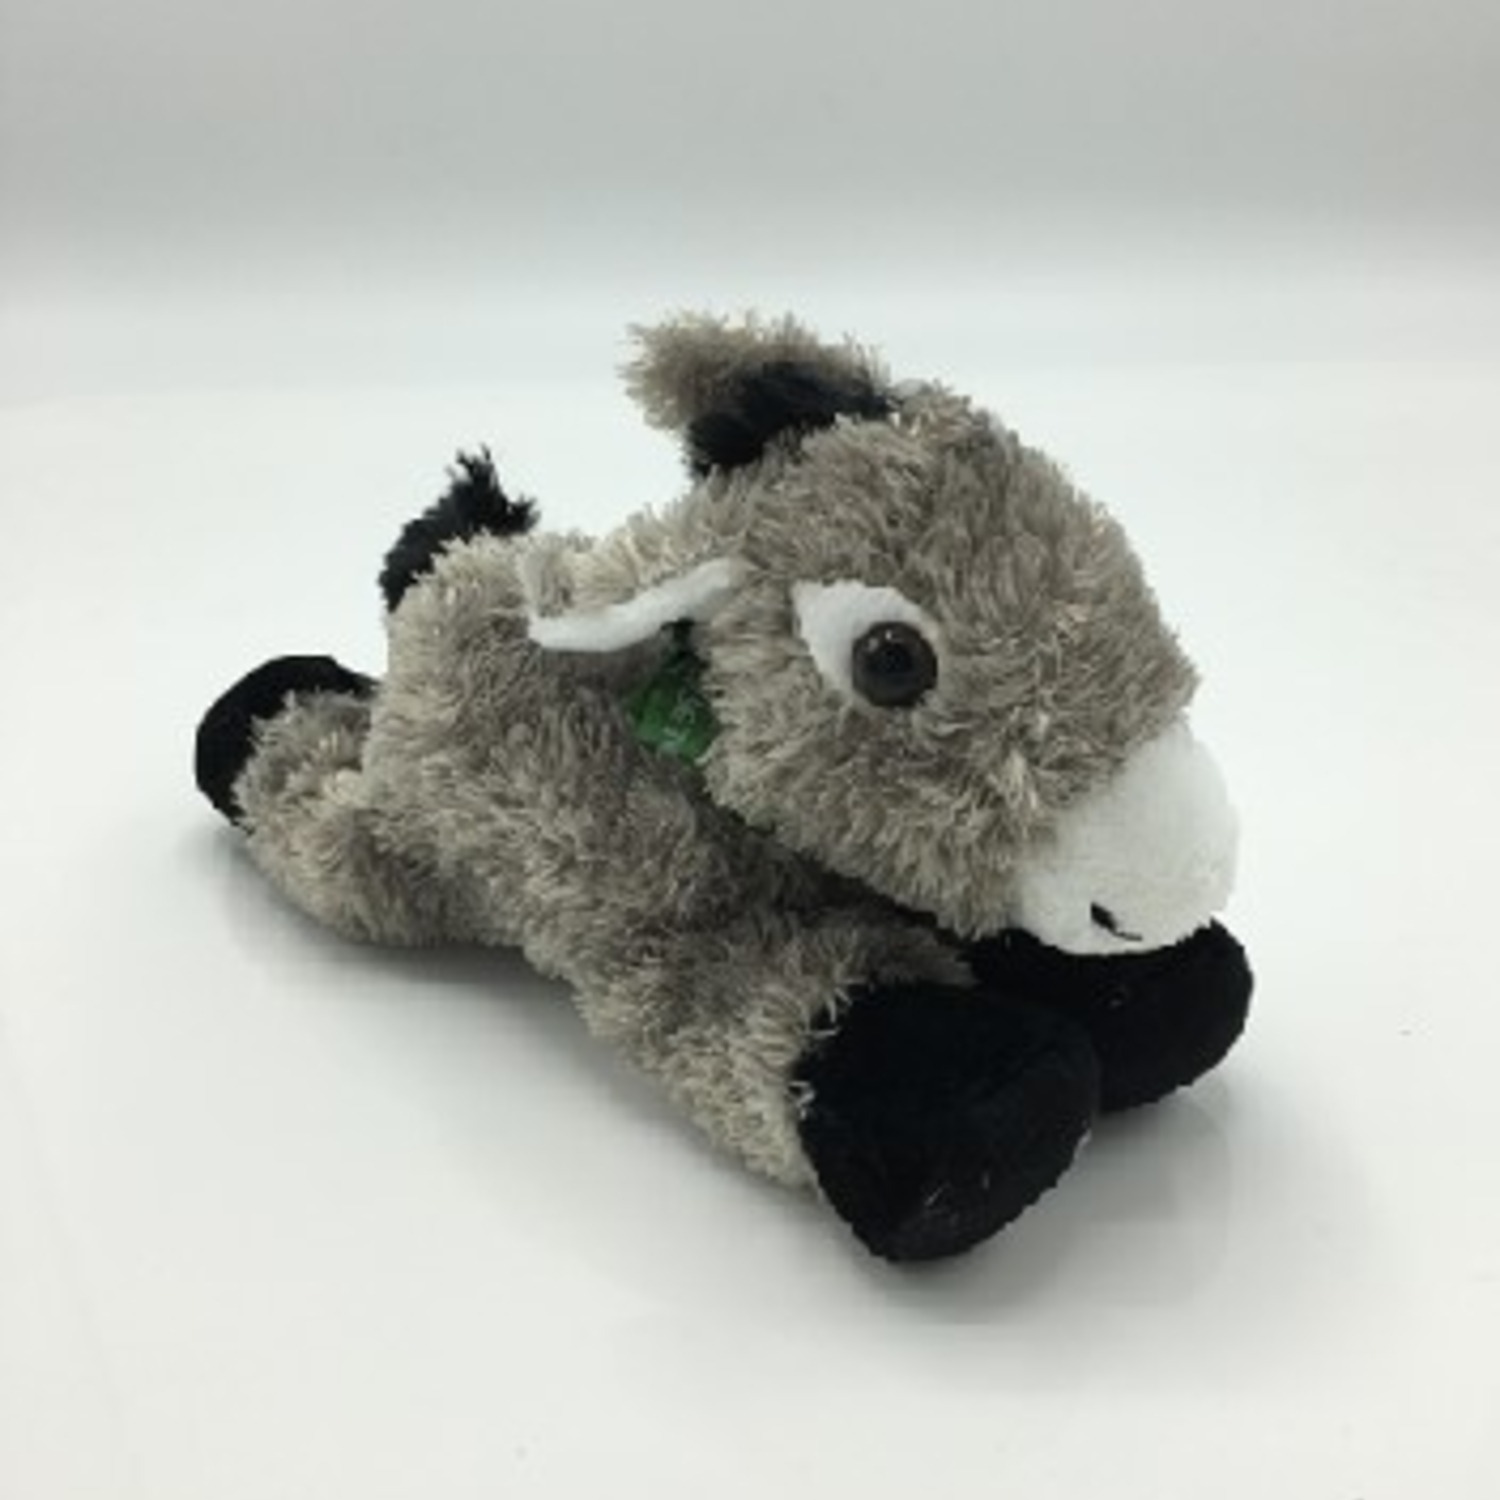 Cute, soft and very cuddly plush flopsie donkey toy.